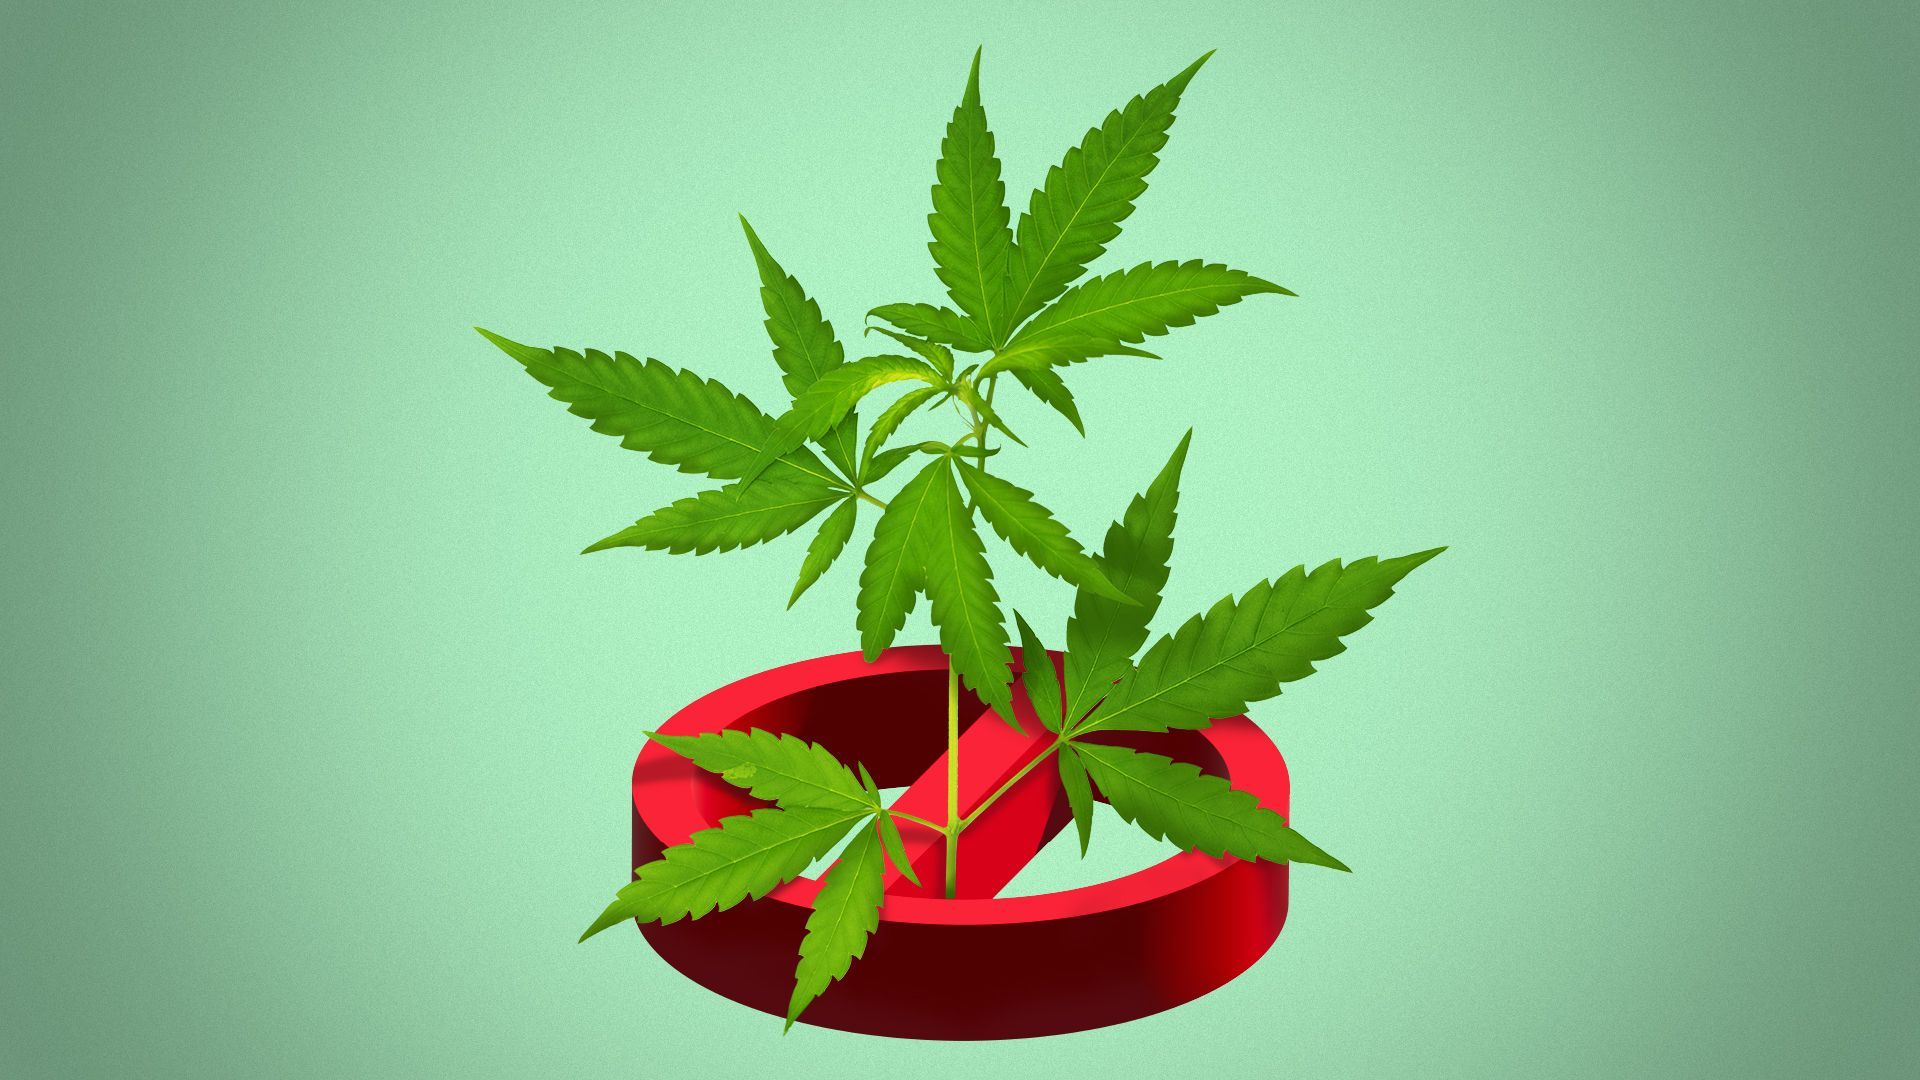 Illustration of a marijuana plant growing through a "no" symbol.